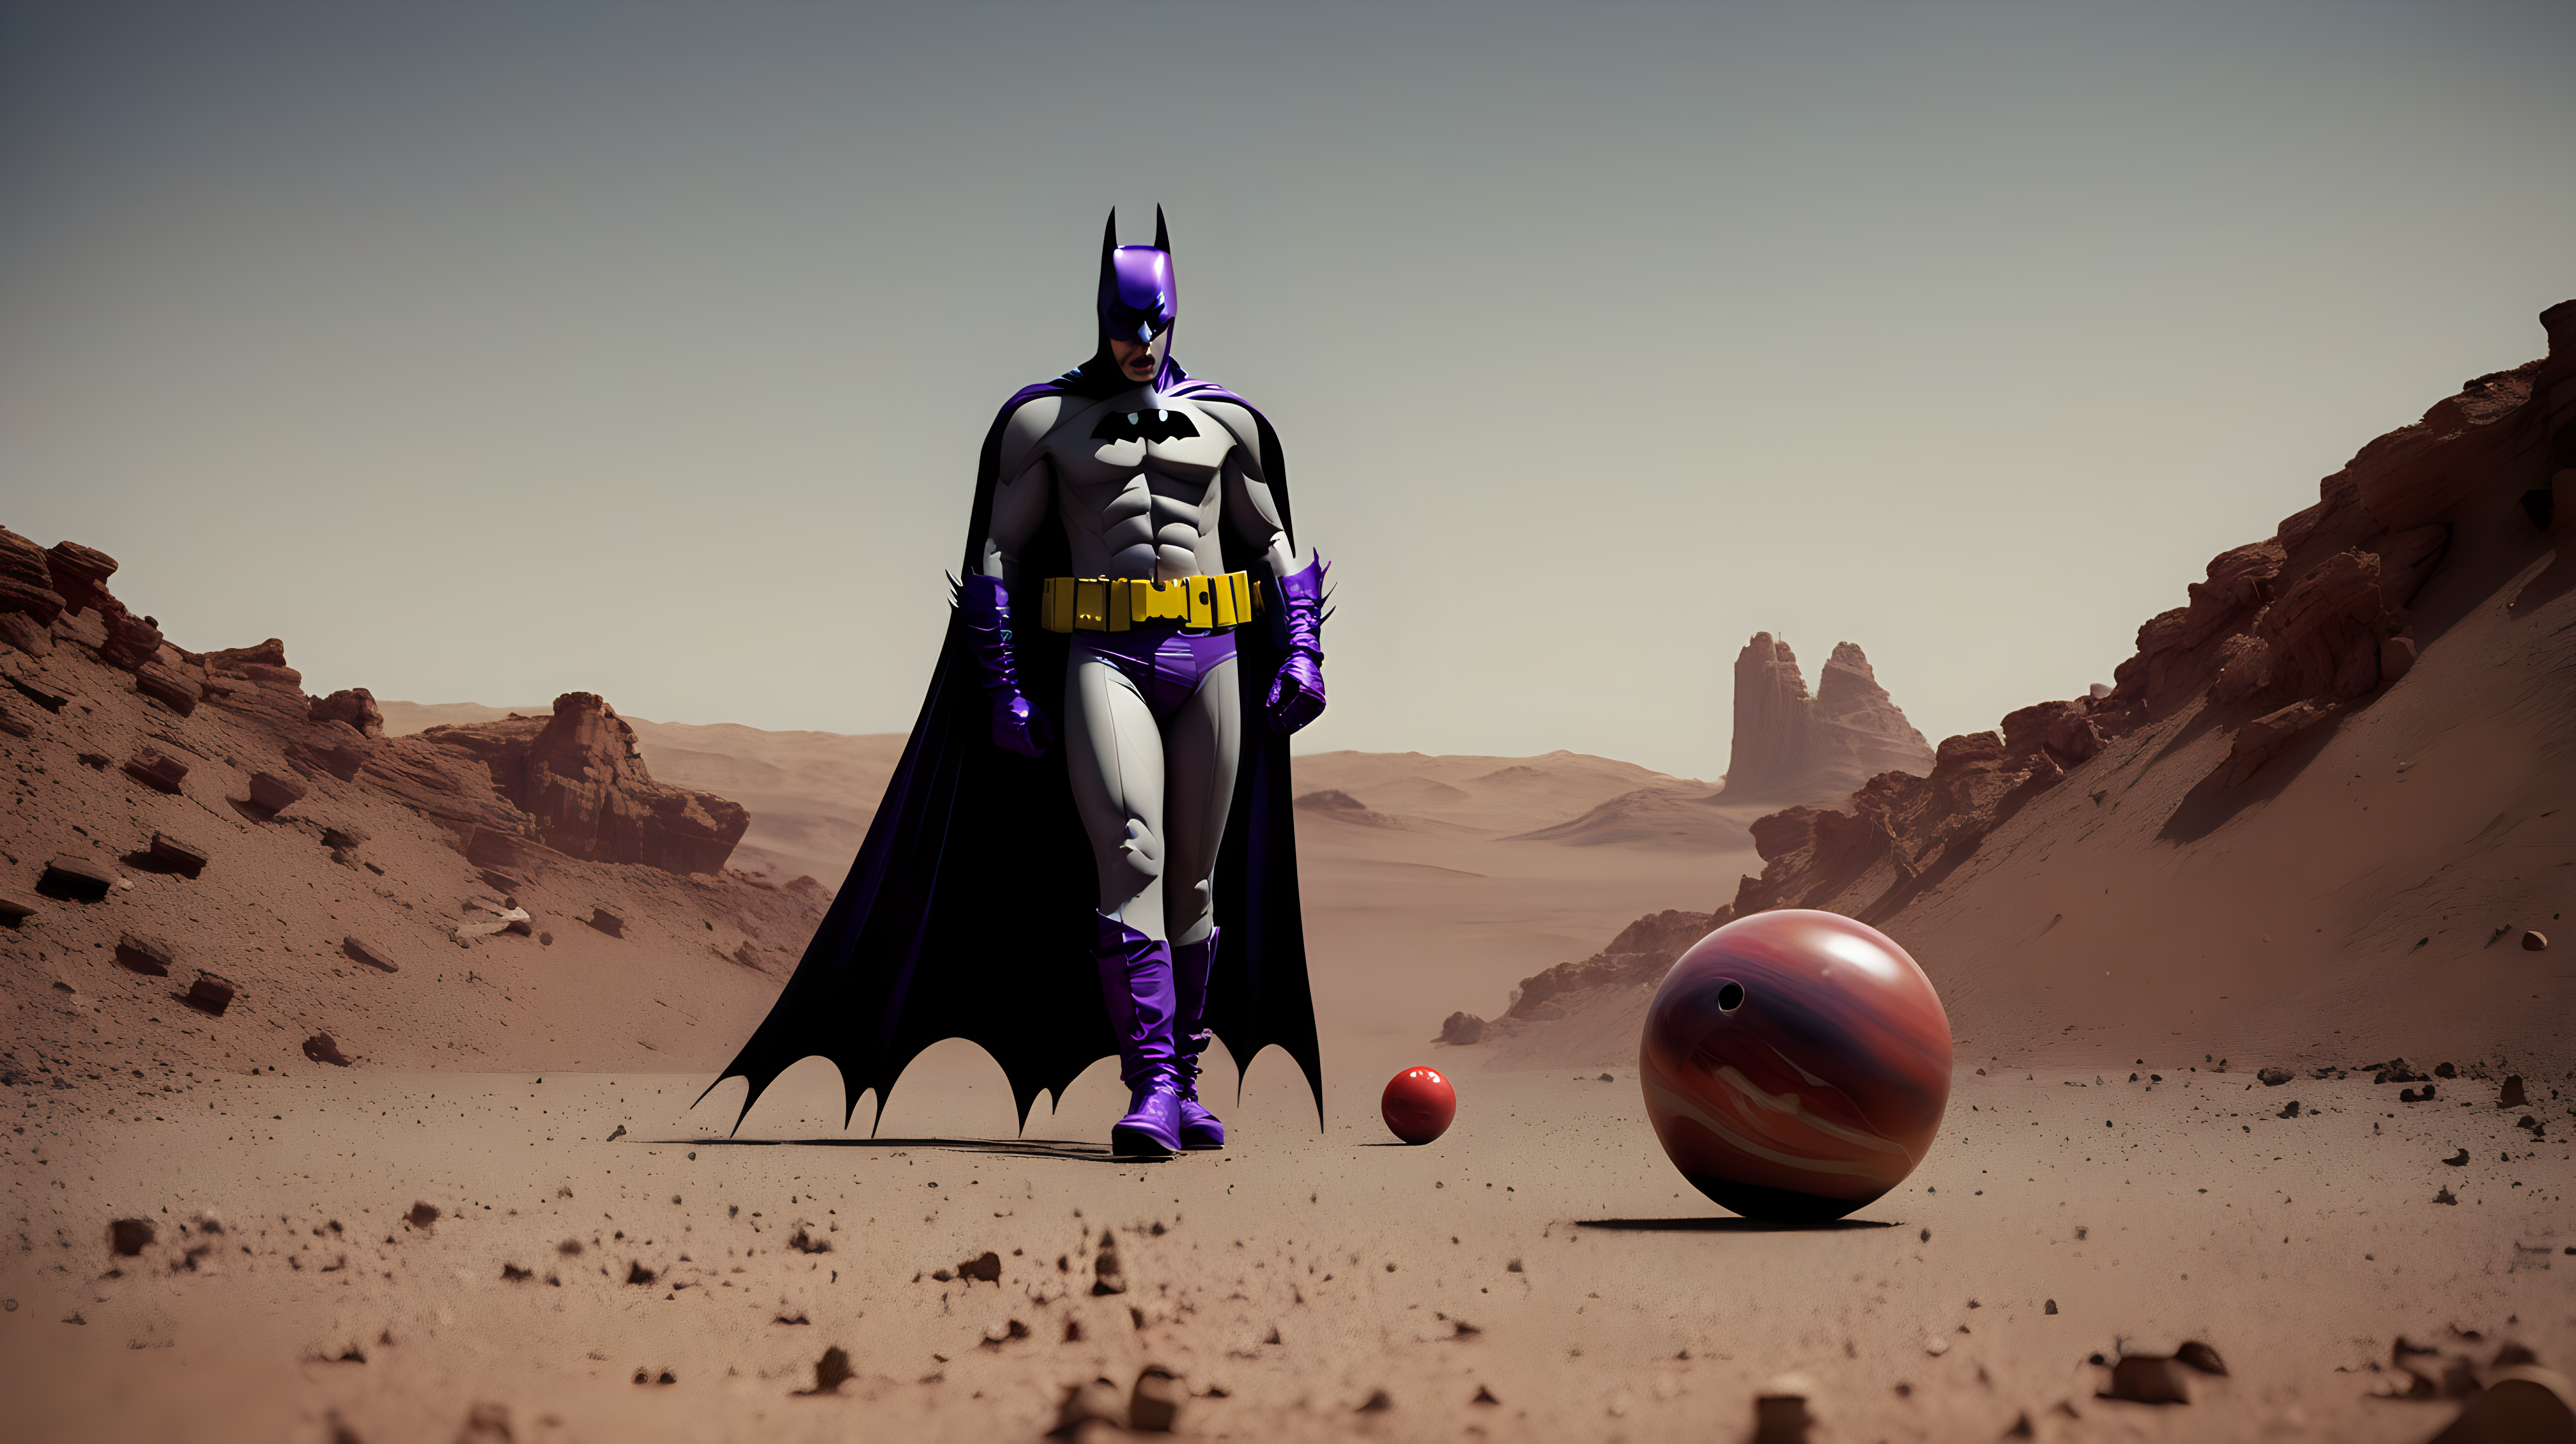 Batman & the Joker bowling on Mars